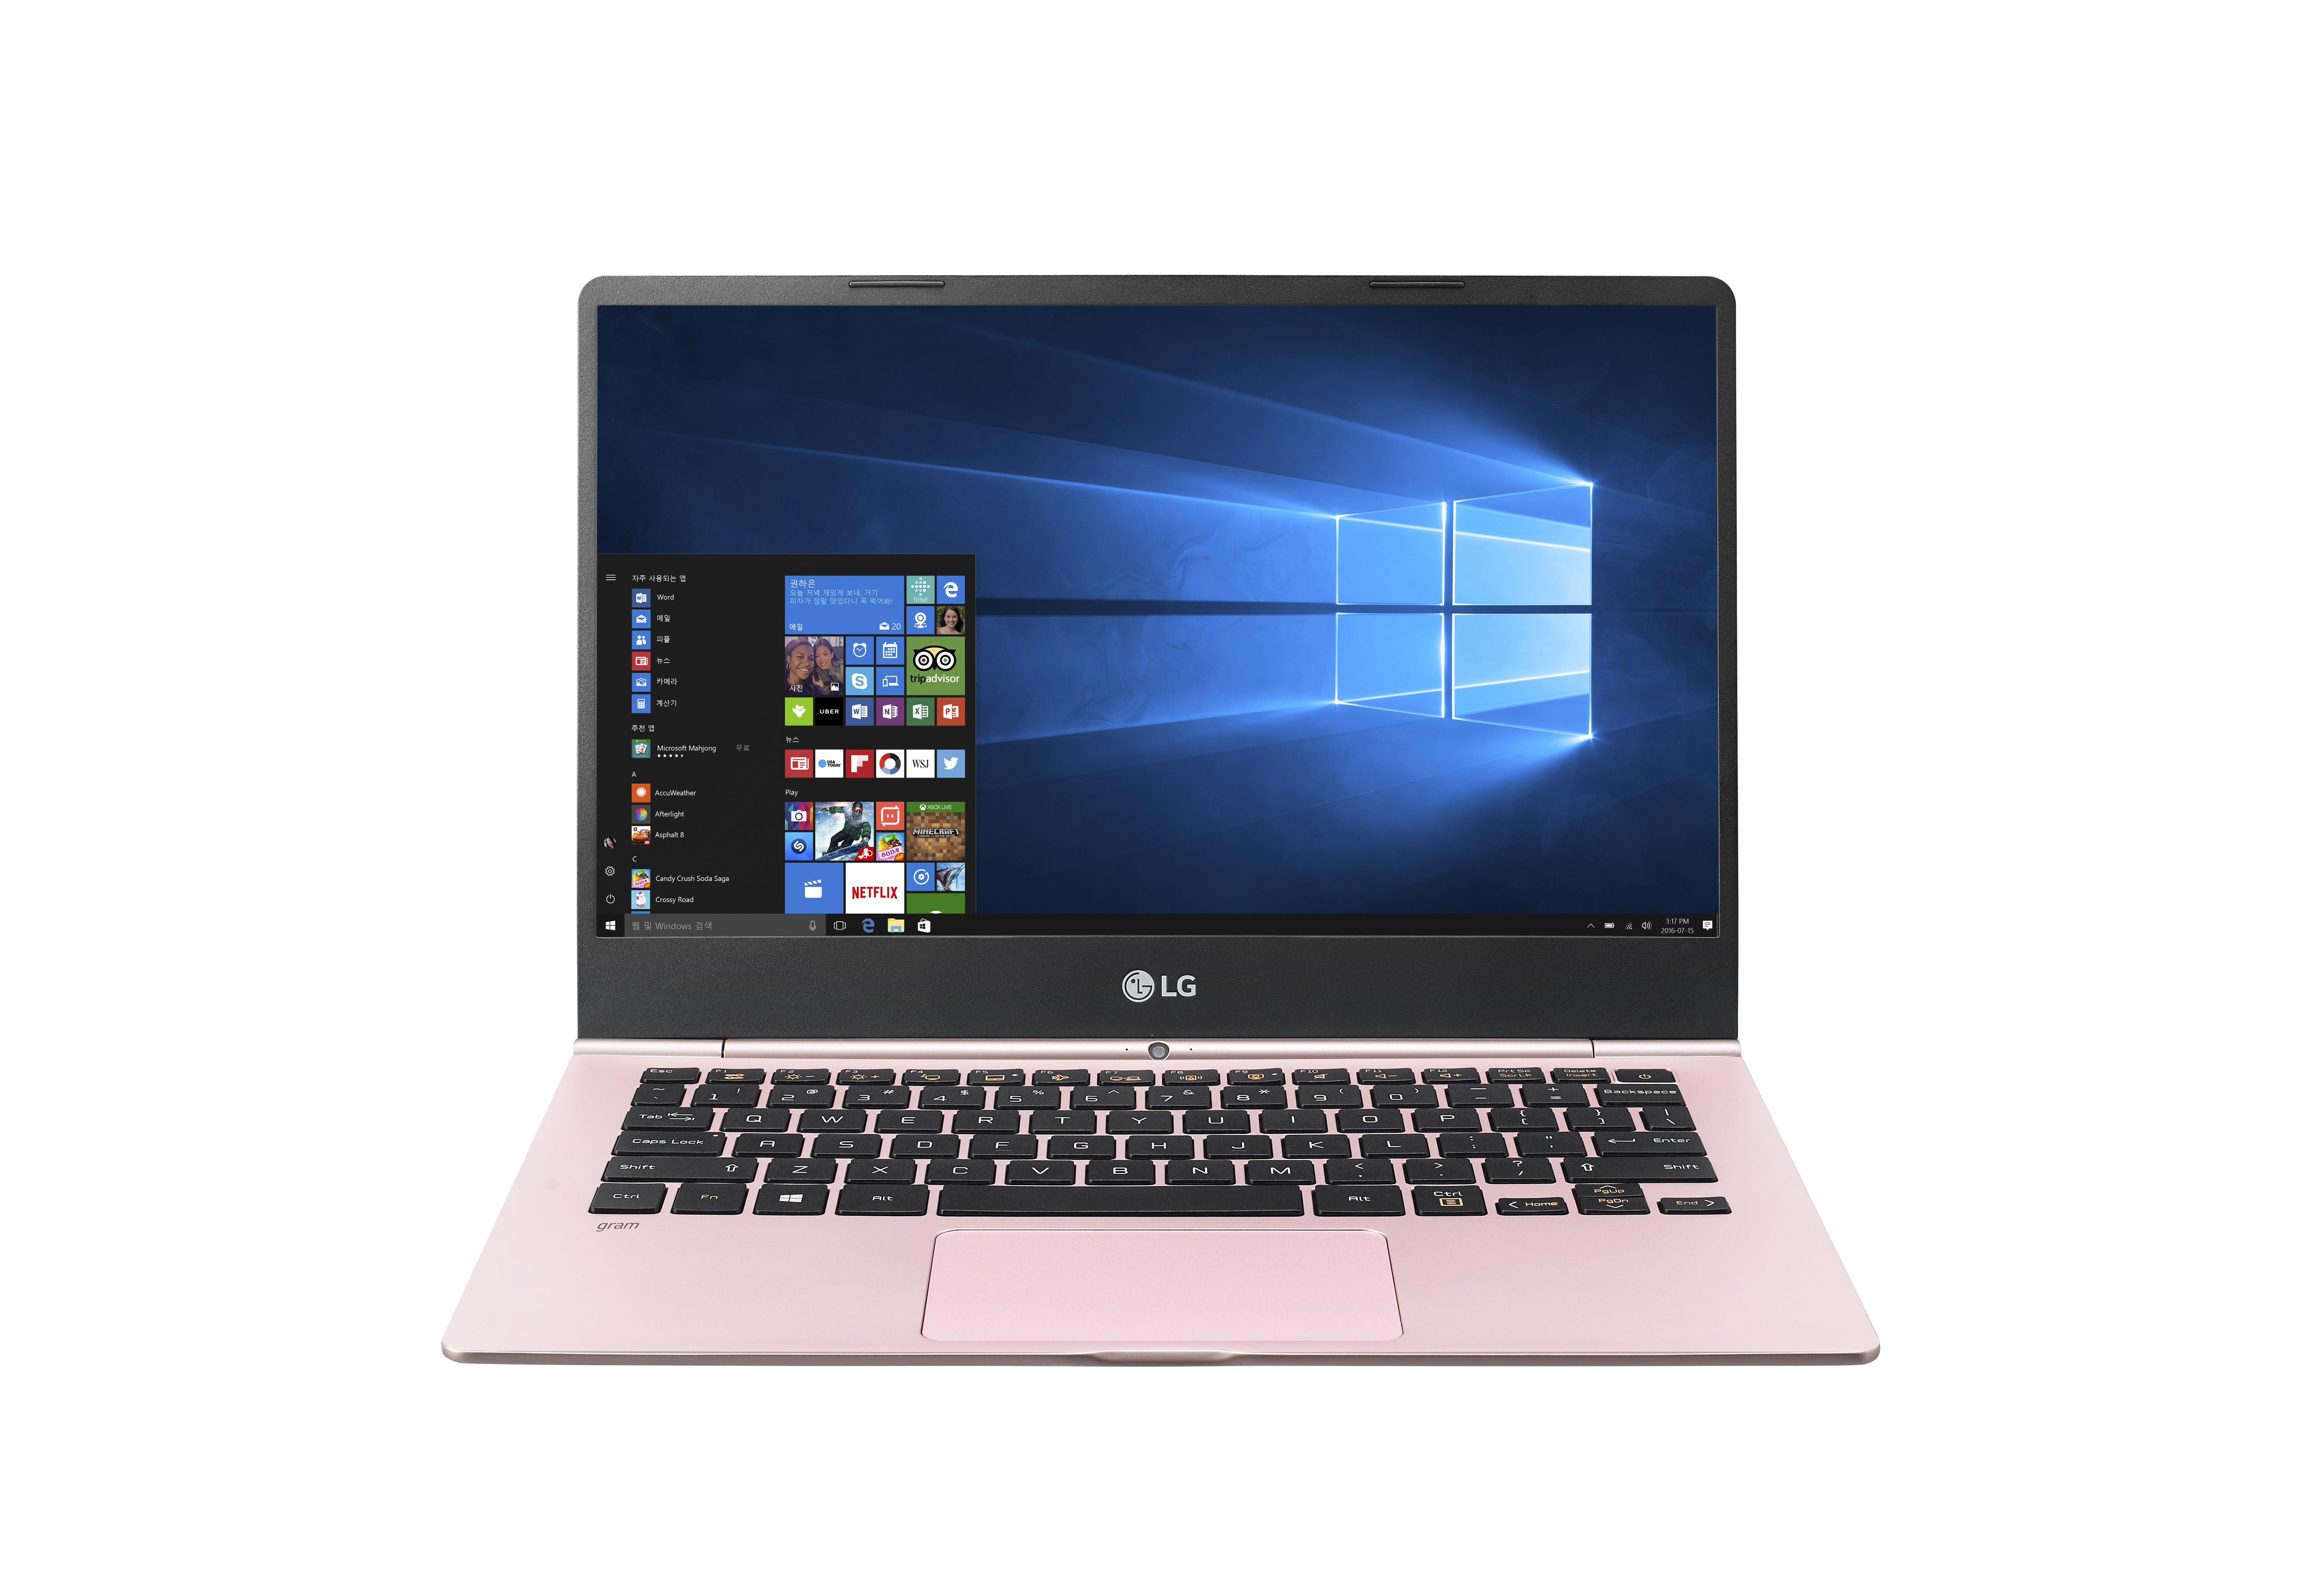 LG Gram laptops powered by Windows 10